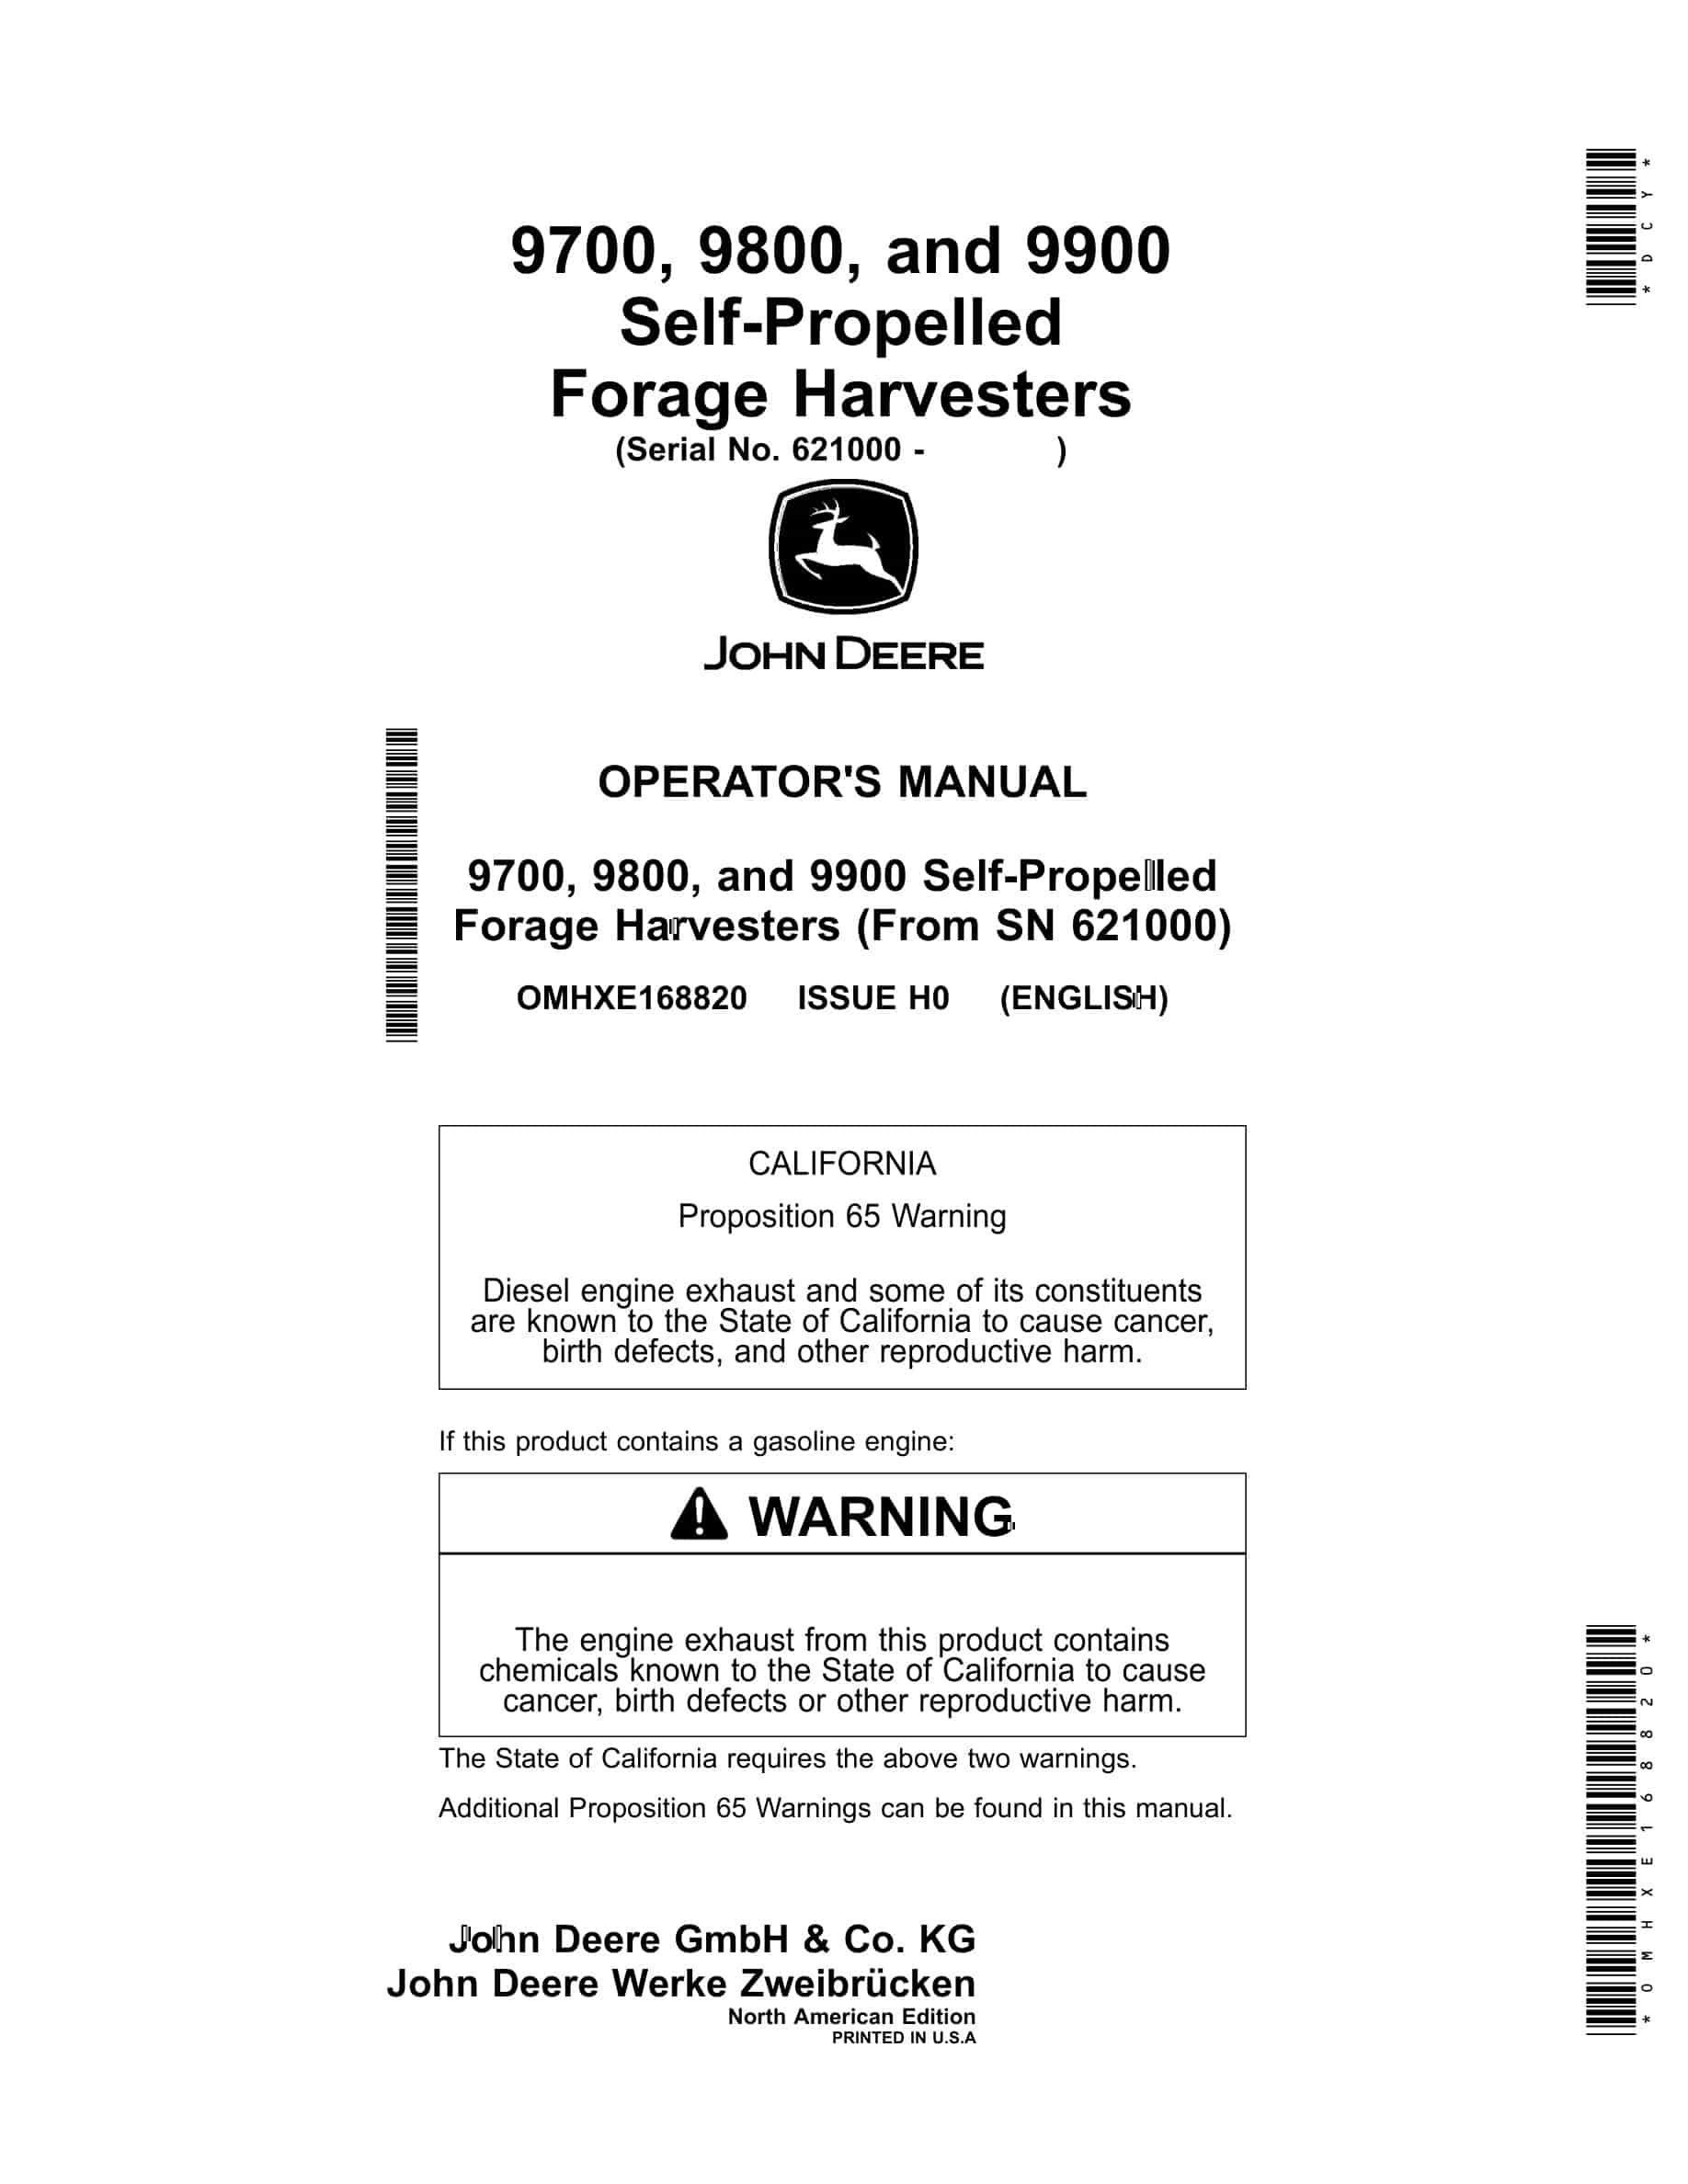 John Deere 9700, 9800, and 9900 Self-Propelled Forage Harvester Operator Manual OMHXE168820-1